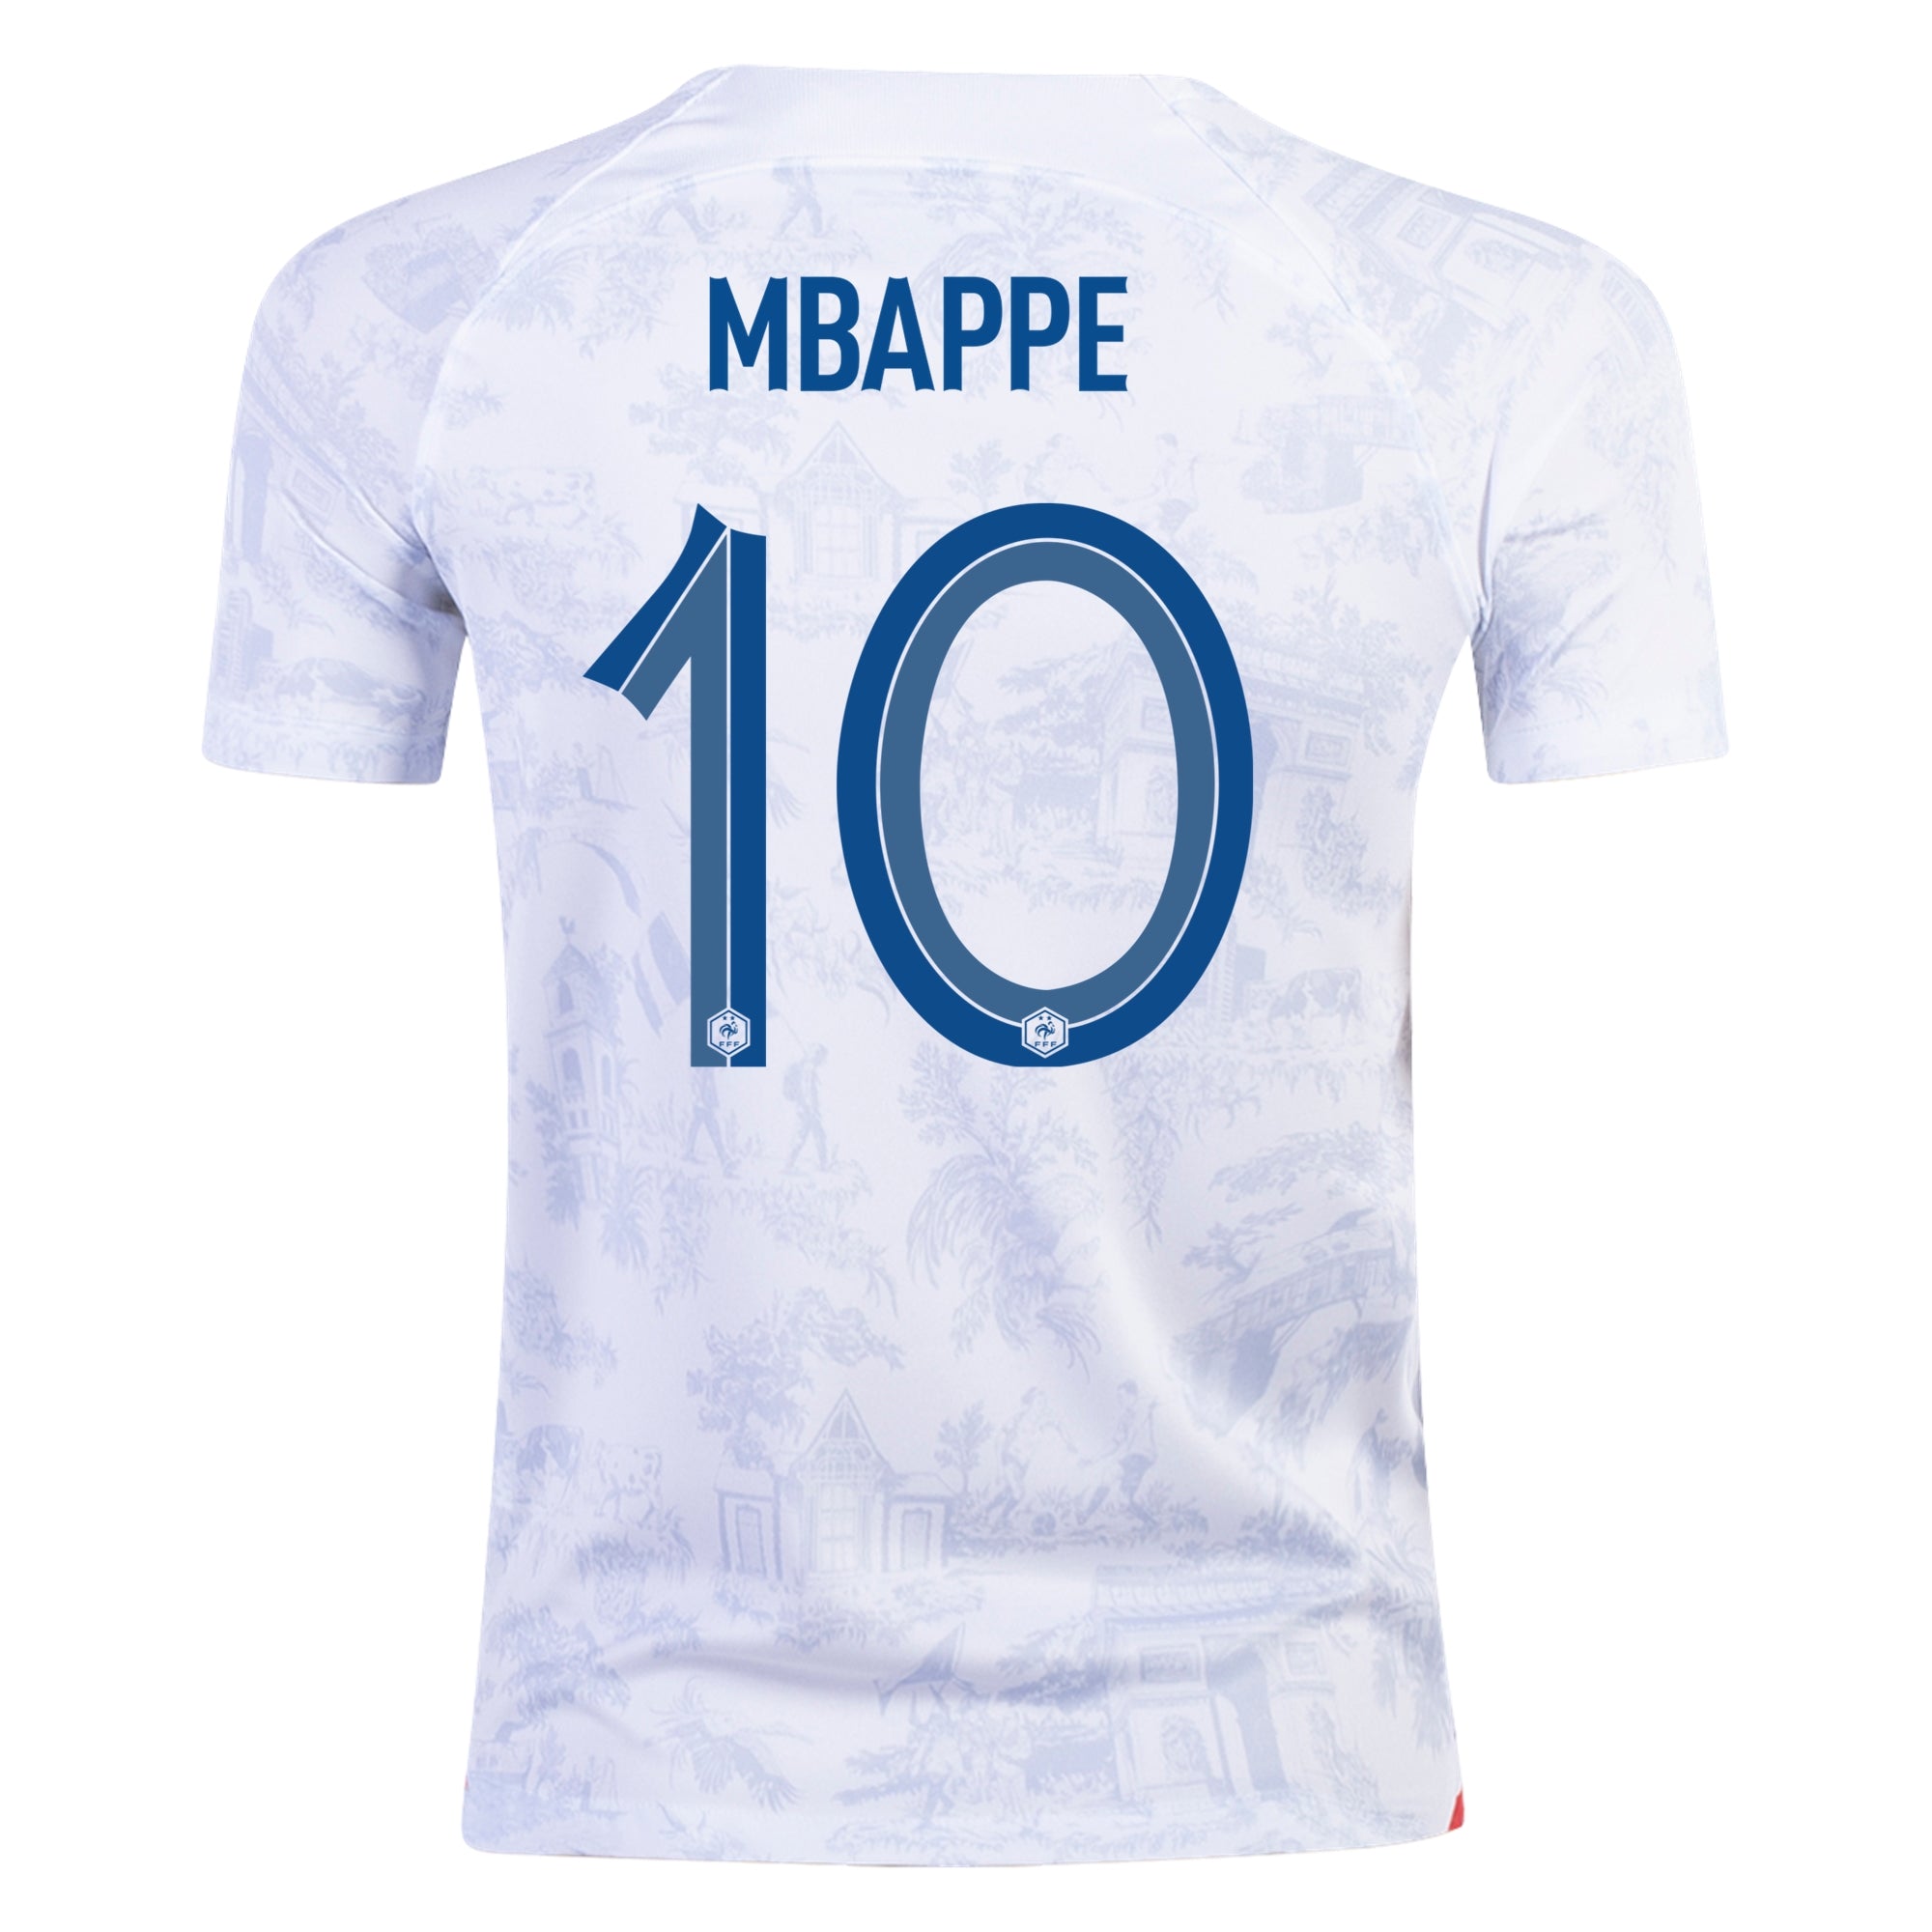 Mbappé -  France